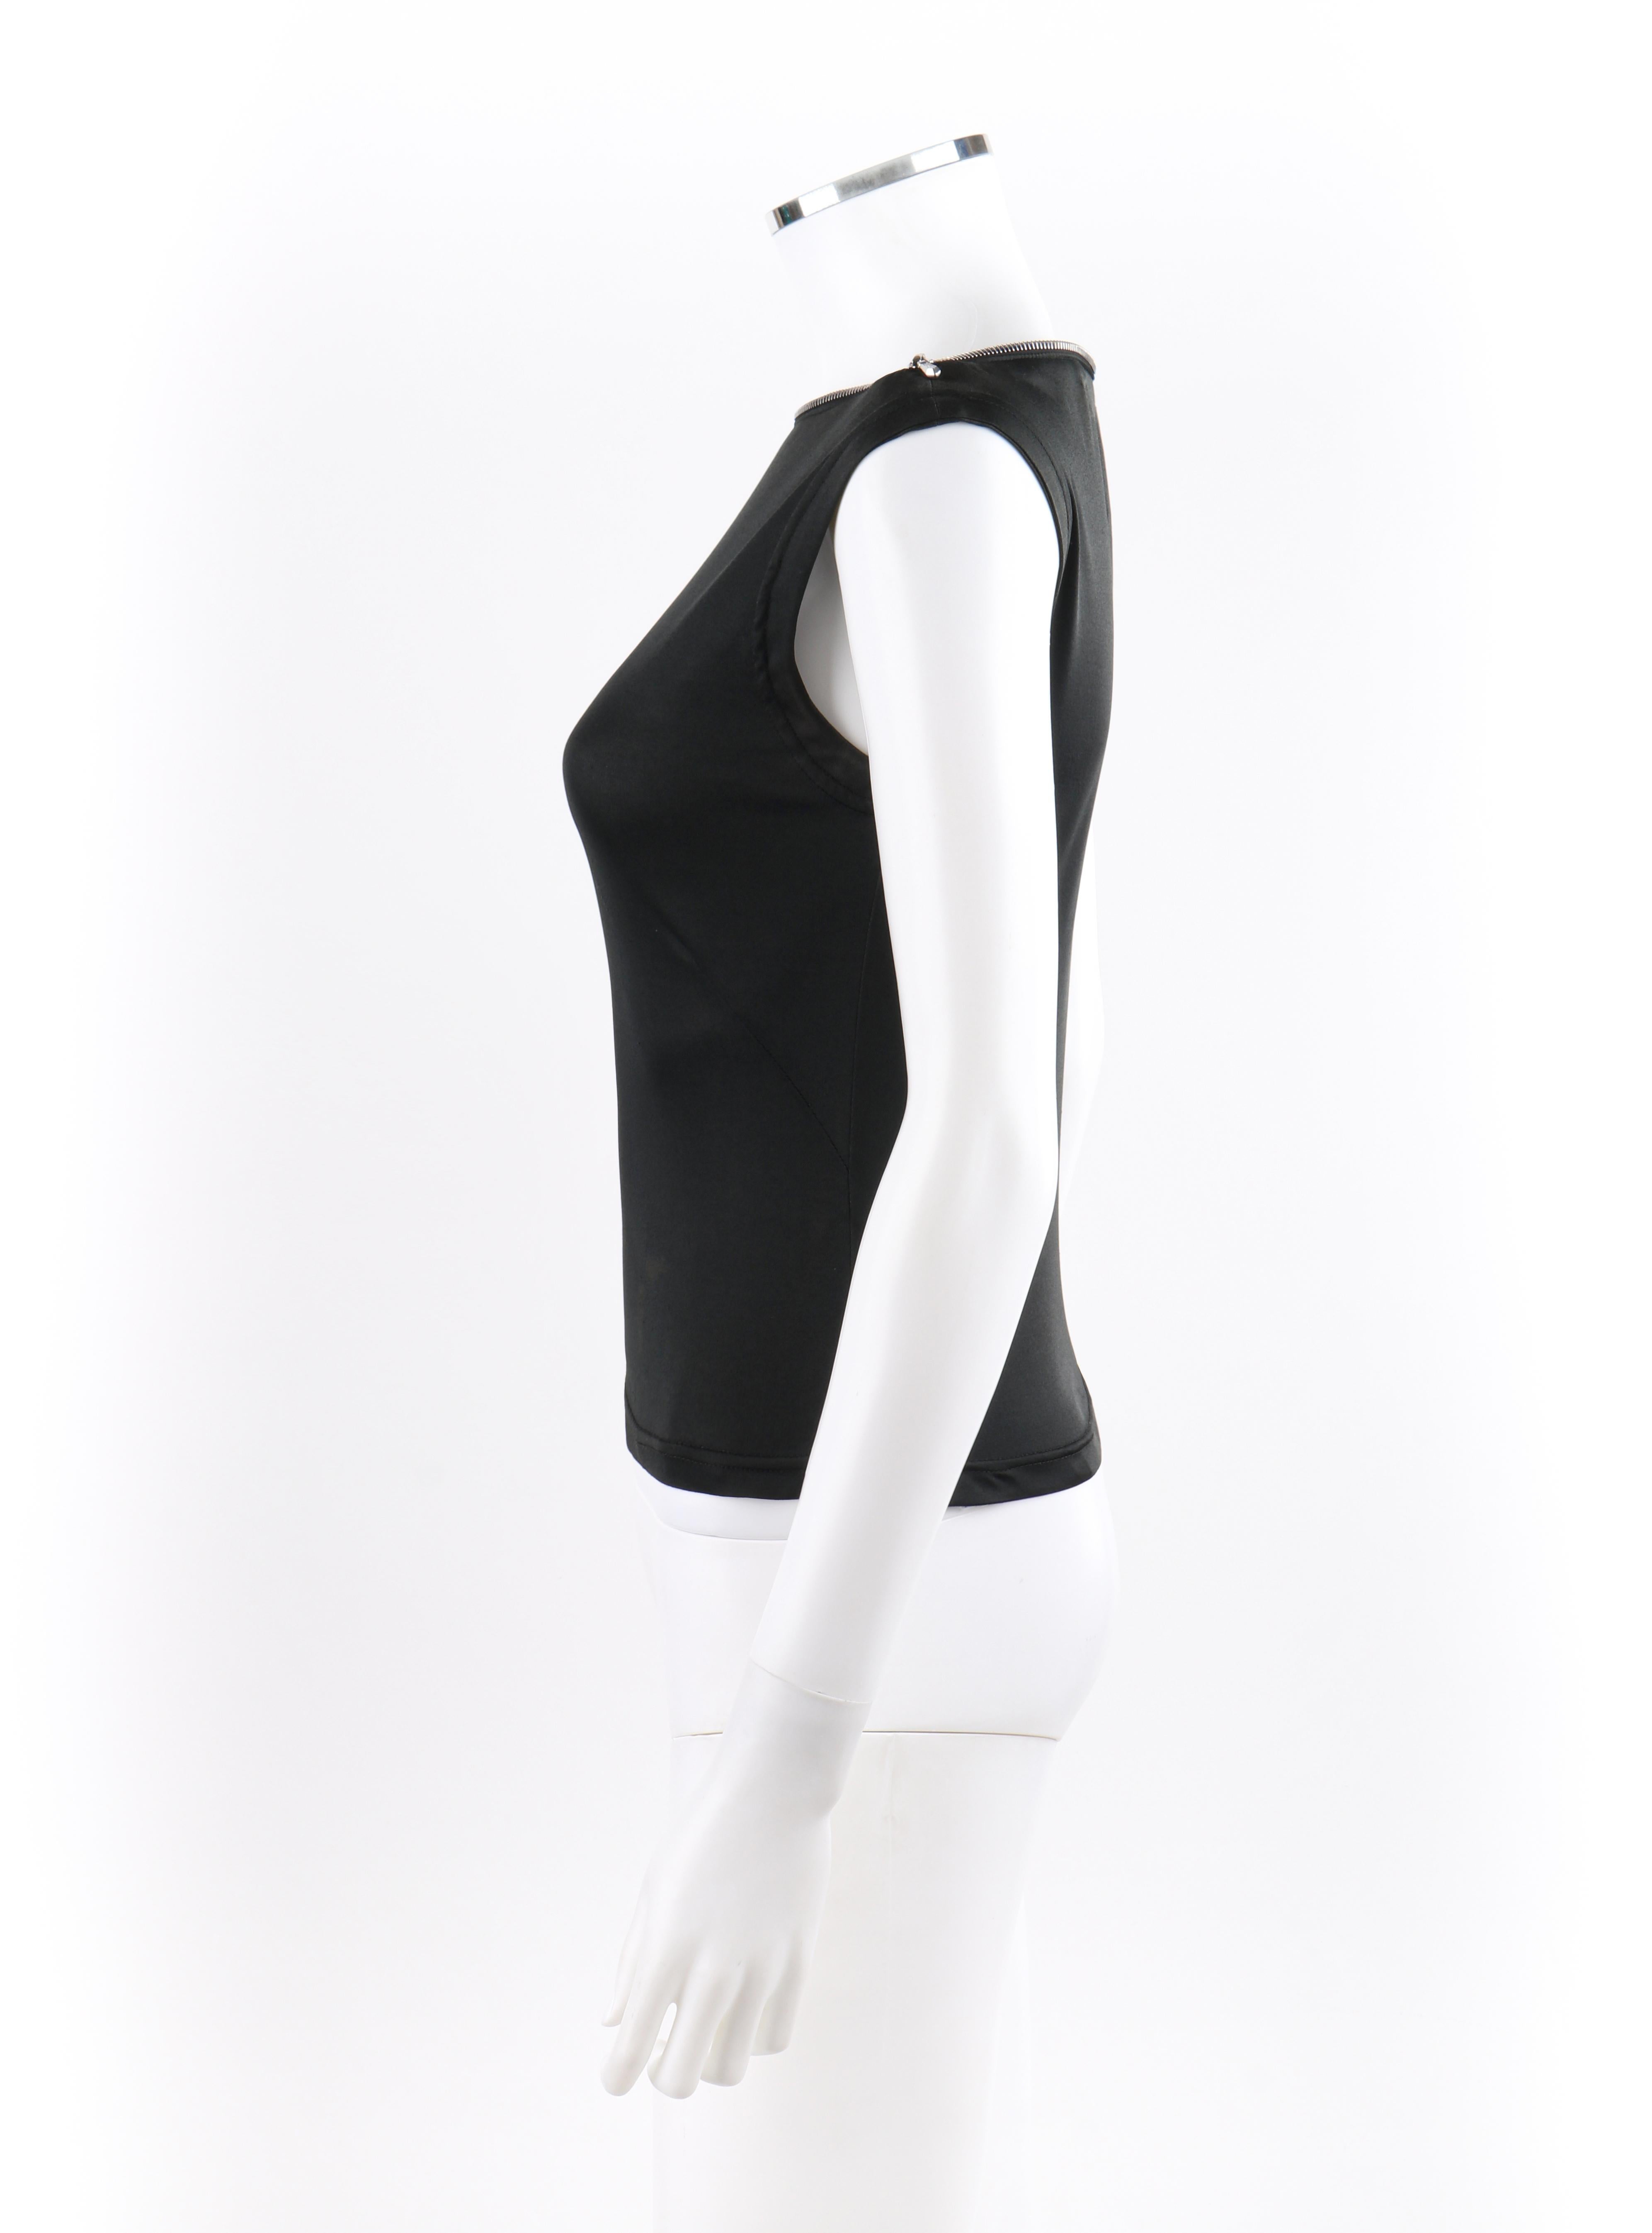 ALEXANDER McQUEEN S/S 1997 “La Poupée” Black Zipper Neck Extended Shoulder Shirt In Good Condition For Sale In Thiensville, WI